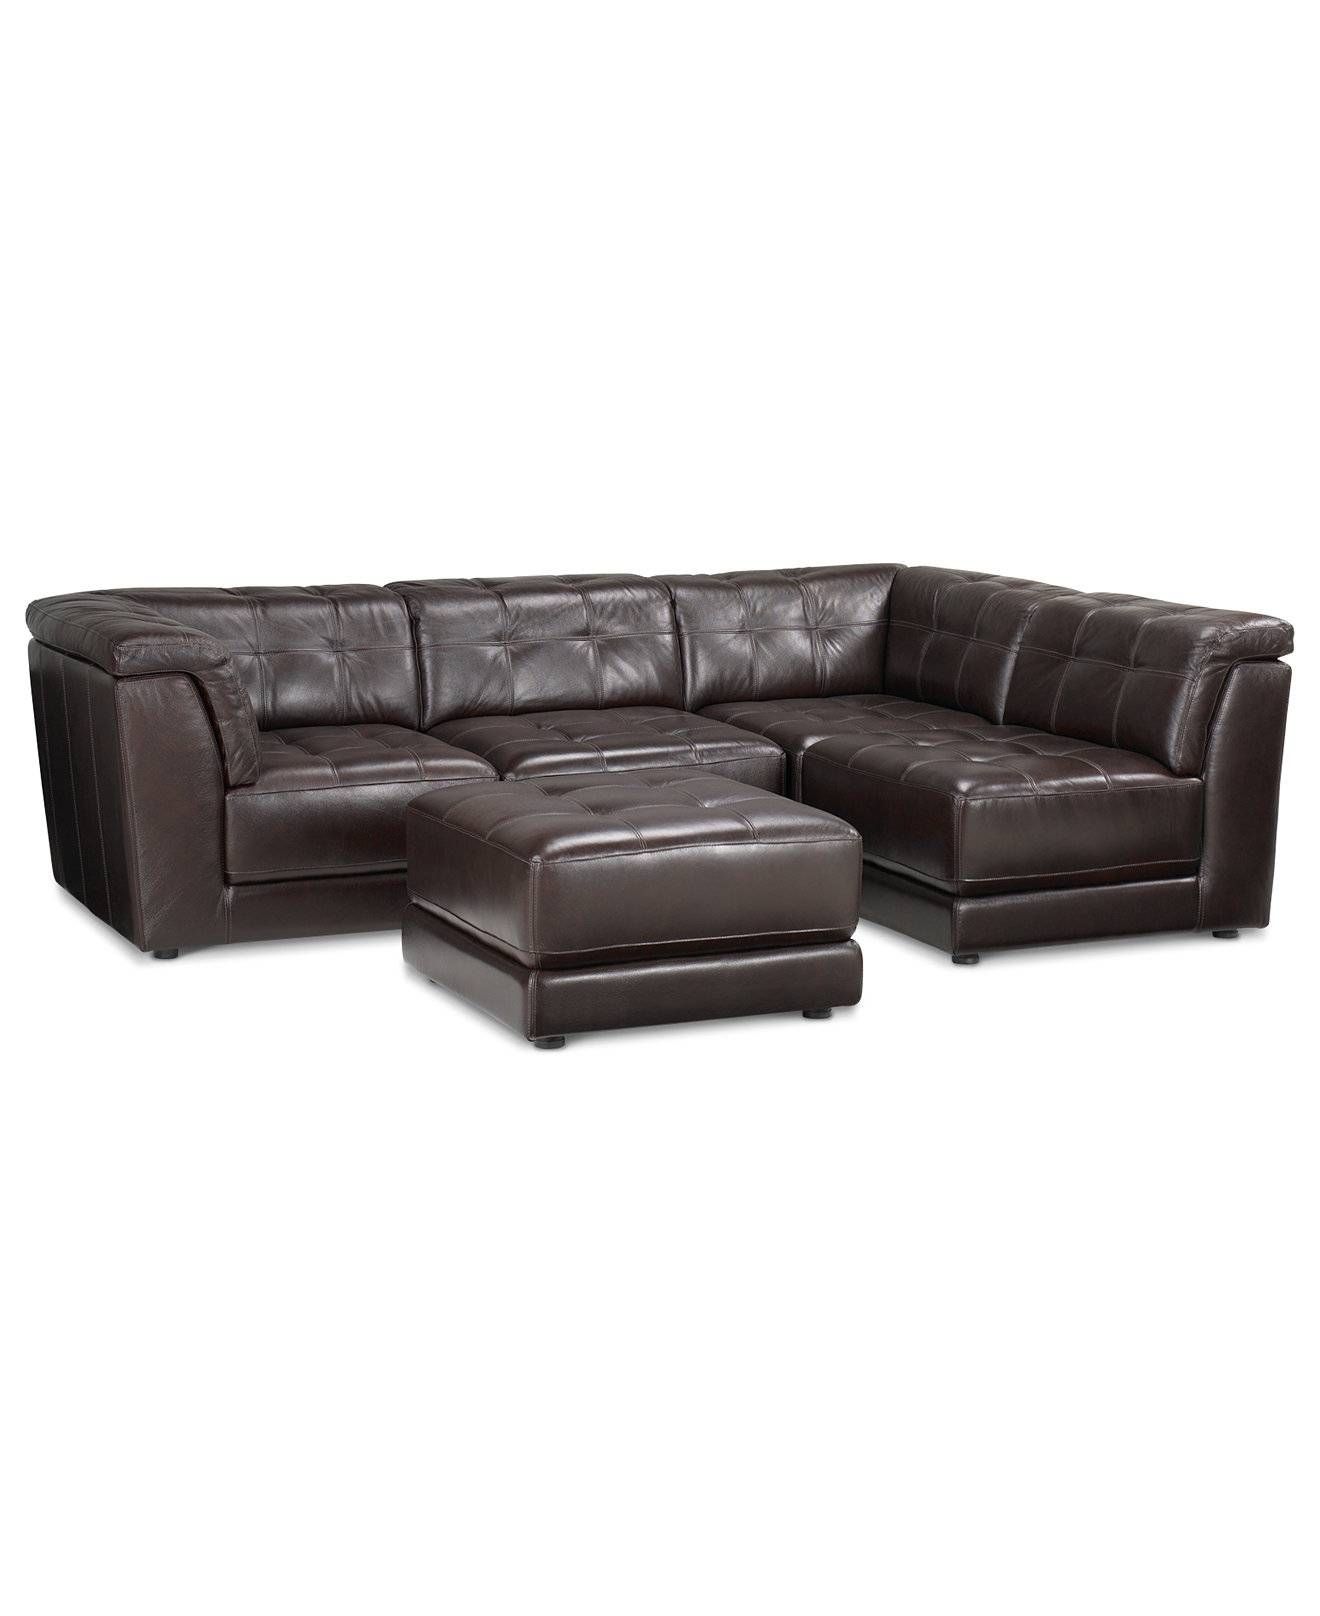 Sofas: Elegant Living Room Sofas Designmacys Sectional Sofa Throughout Macys Leather Sectional Sofa (View 17 of 25)